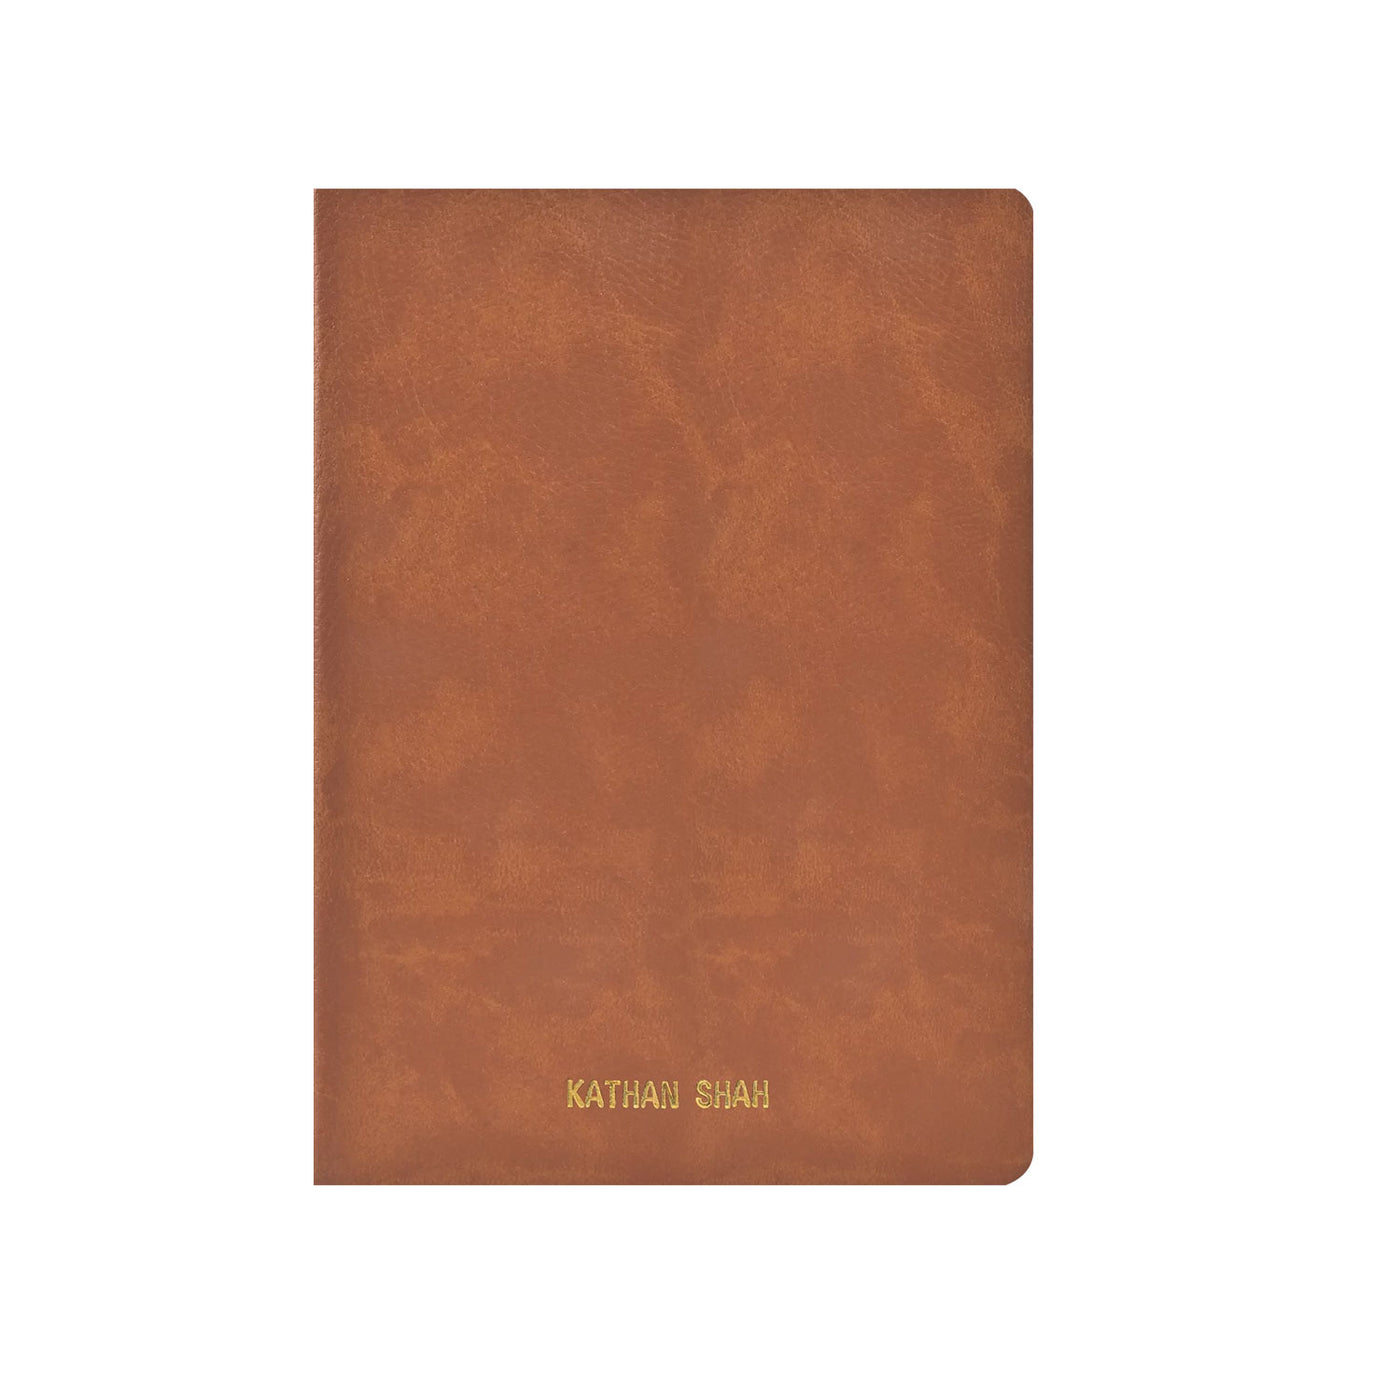 Scholar Prisma Tan Notebook - A5 Ruled 3